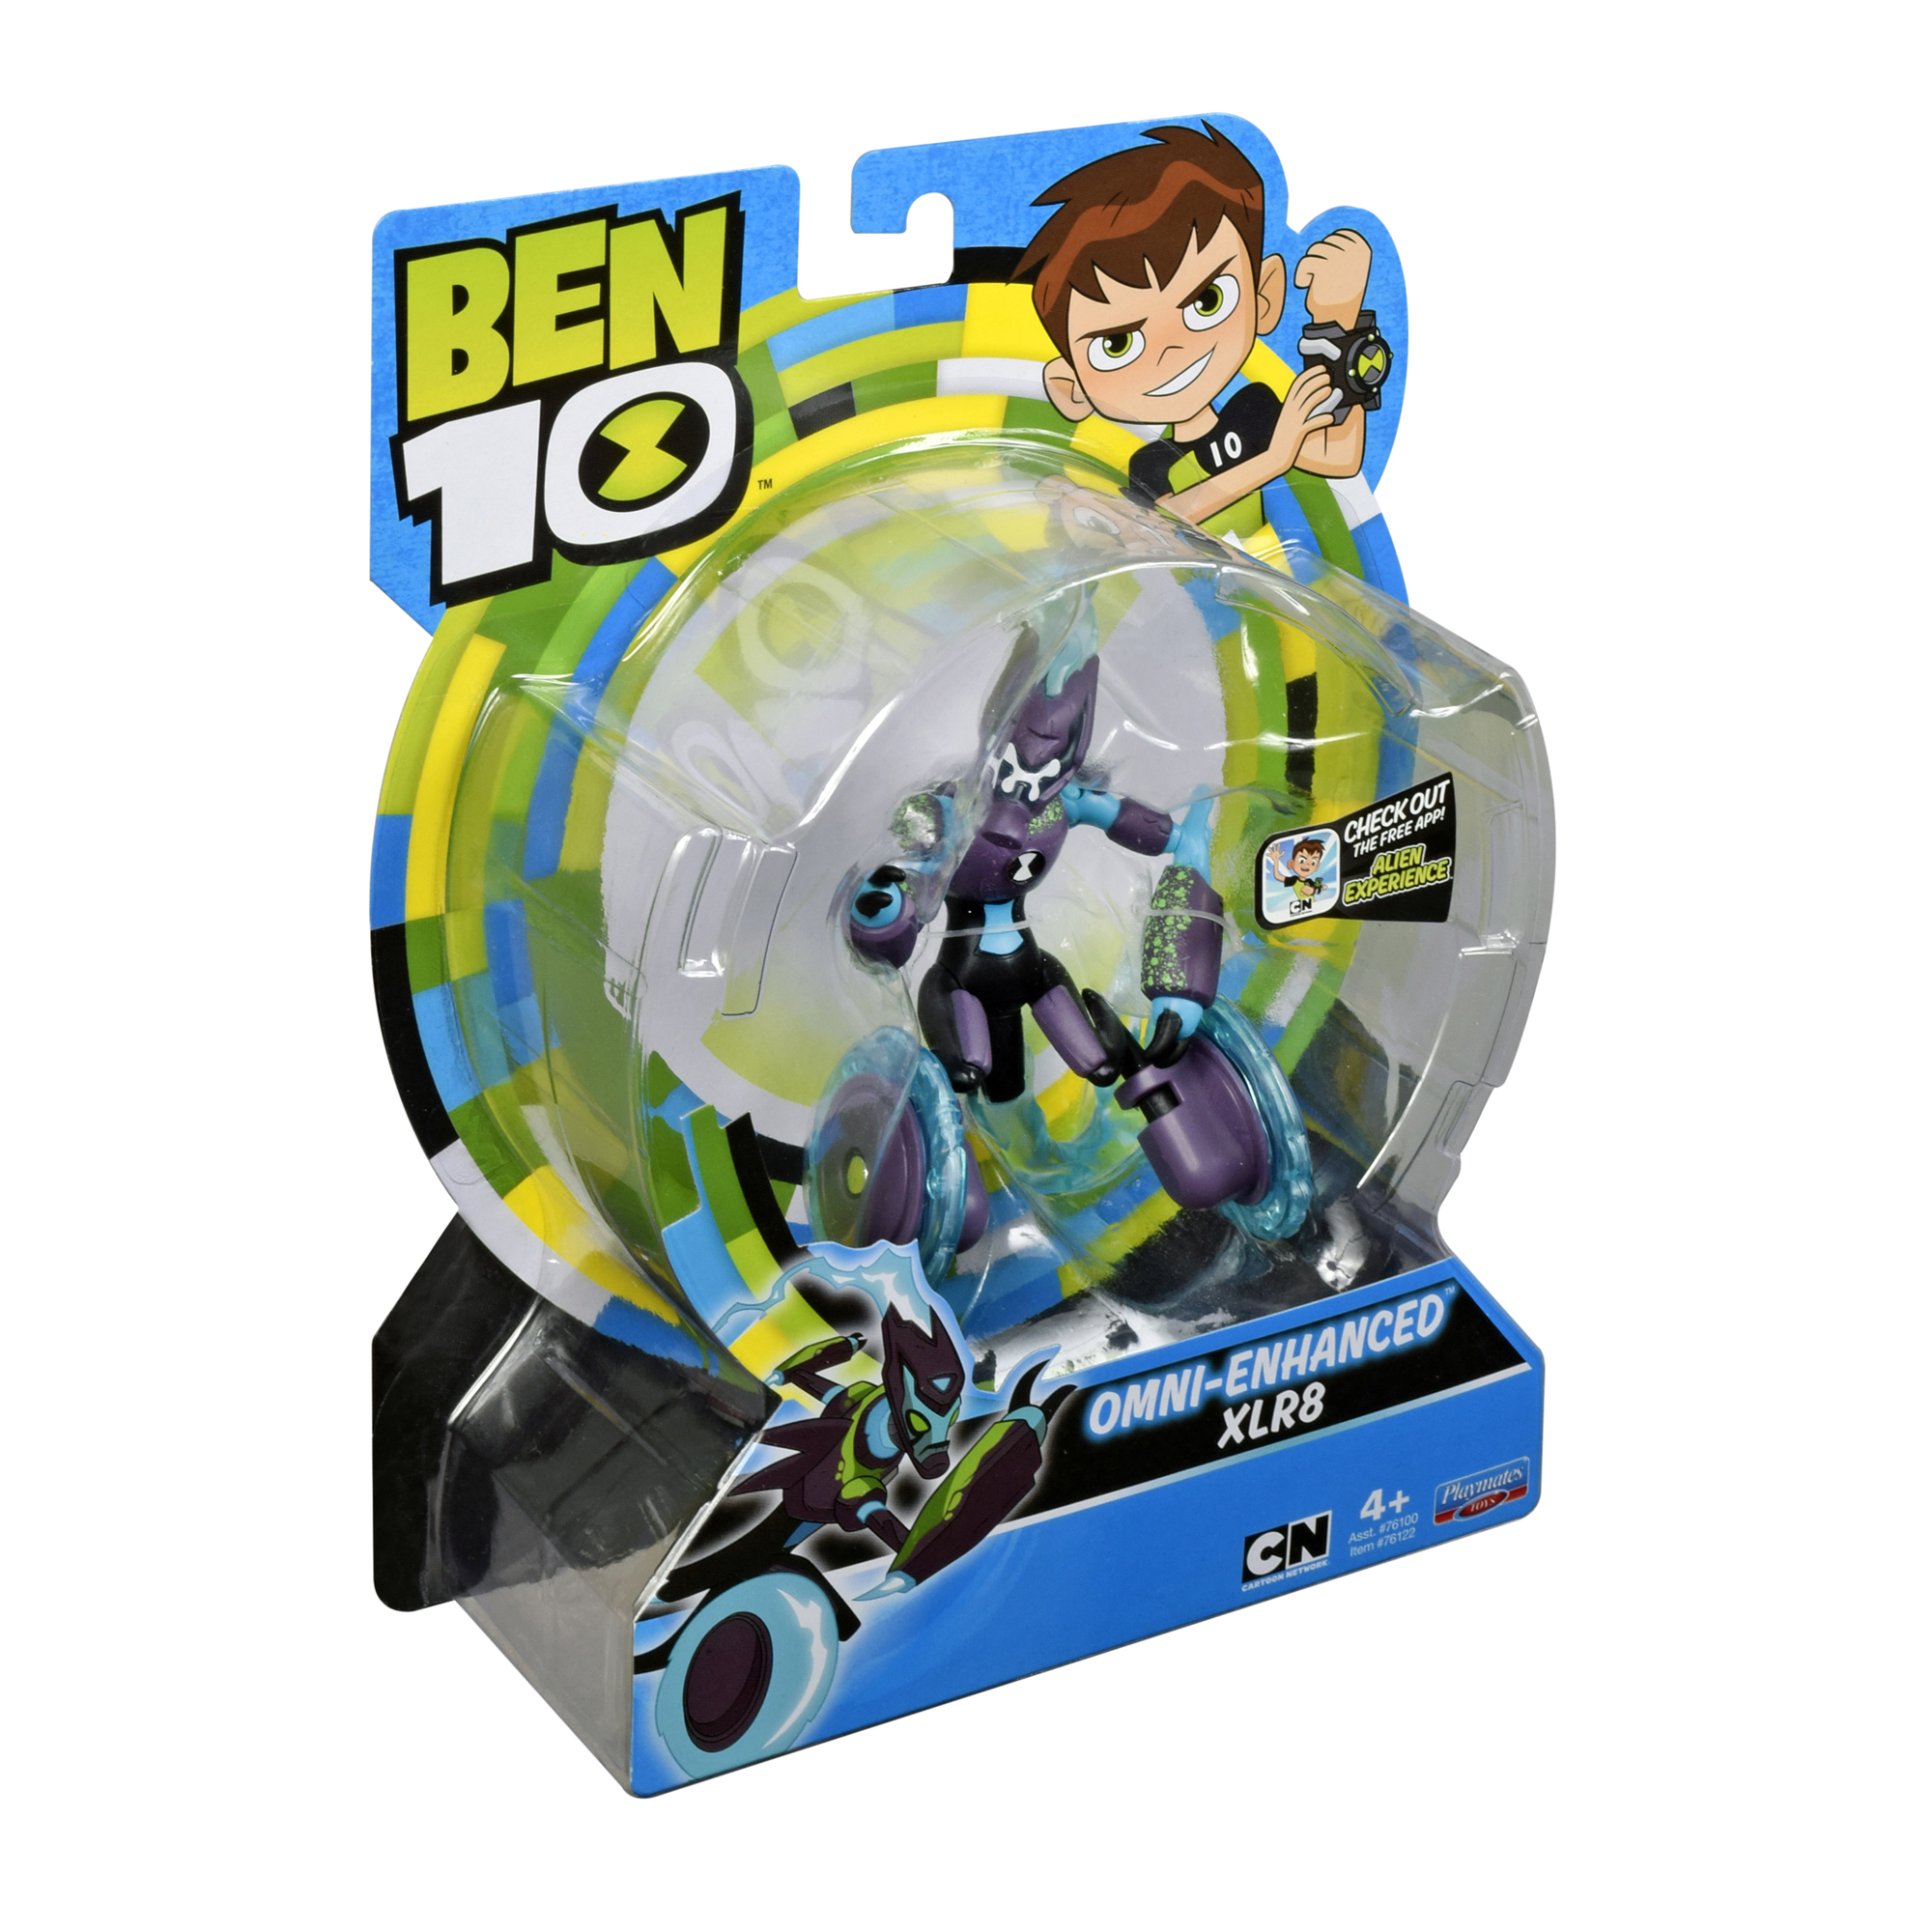 Ben 10 Omni-Enhanced XLR8 Basic Figure - image 3 of 5